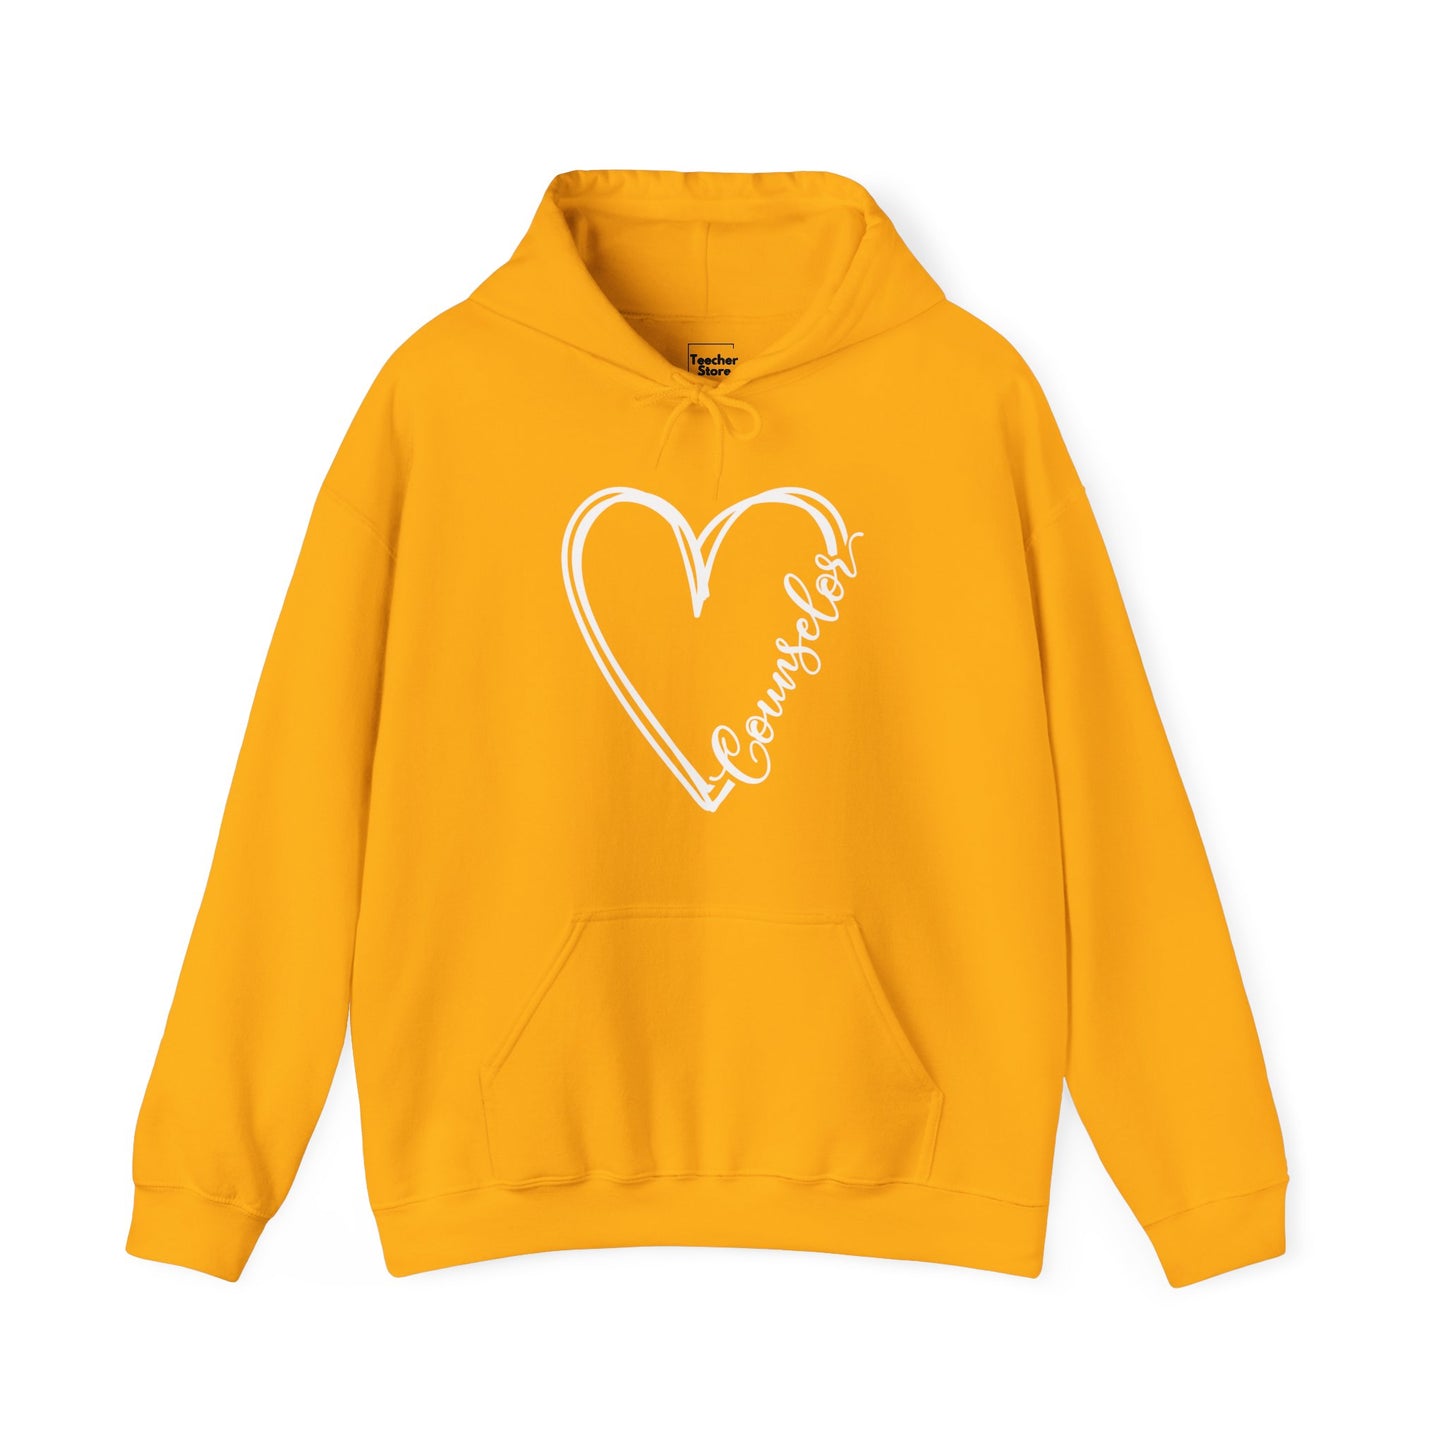 Counselor Heart Hooded Sweatshirt